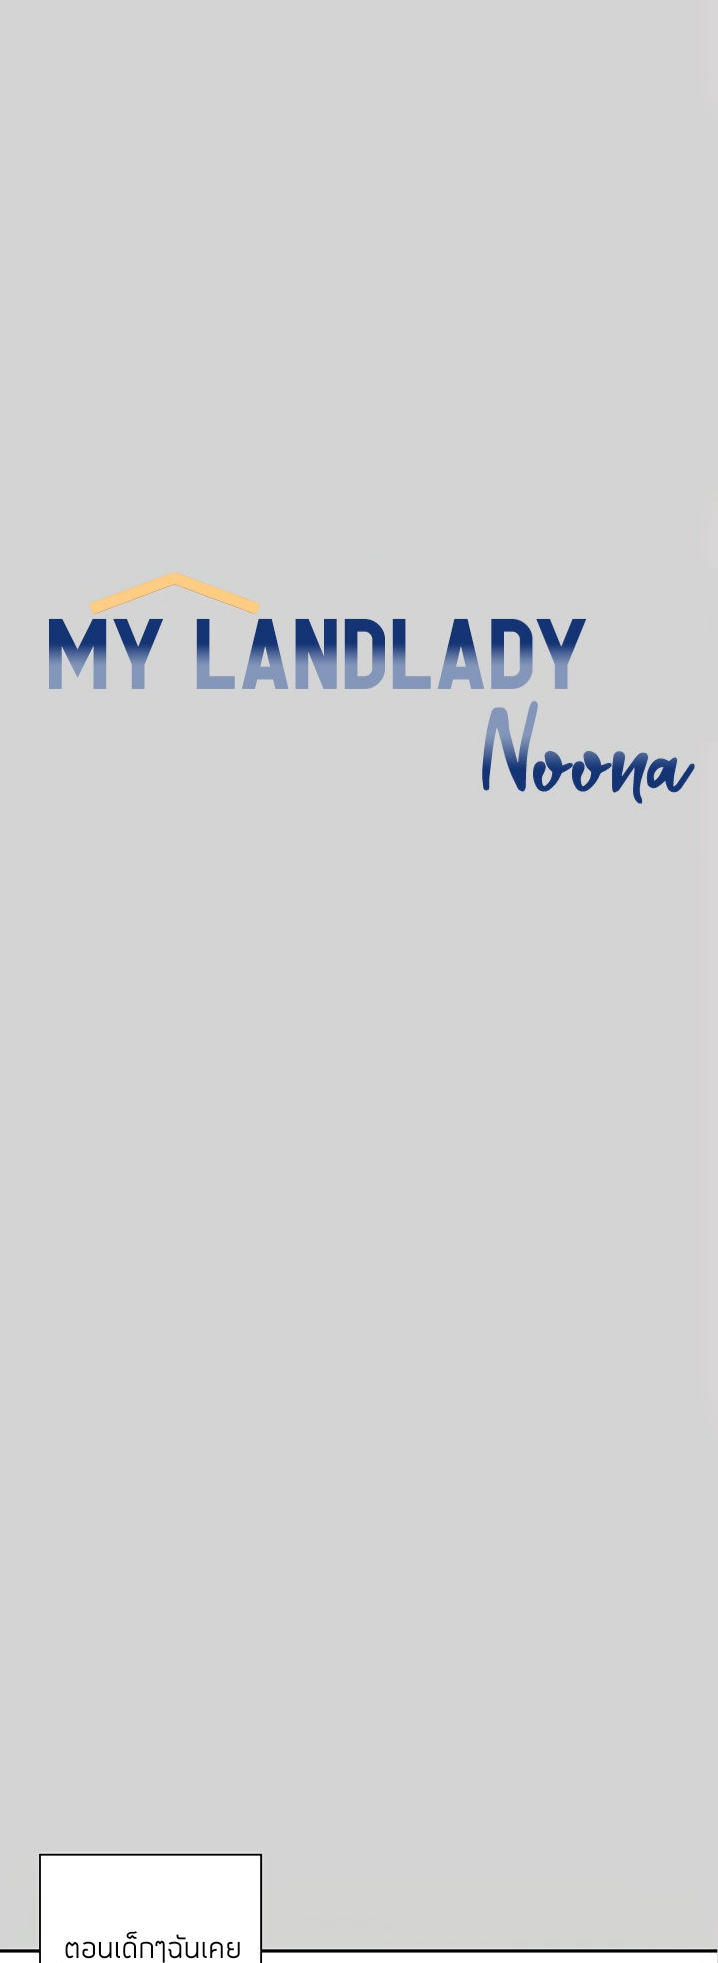 My Landlady Noona1 (1)